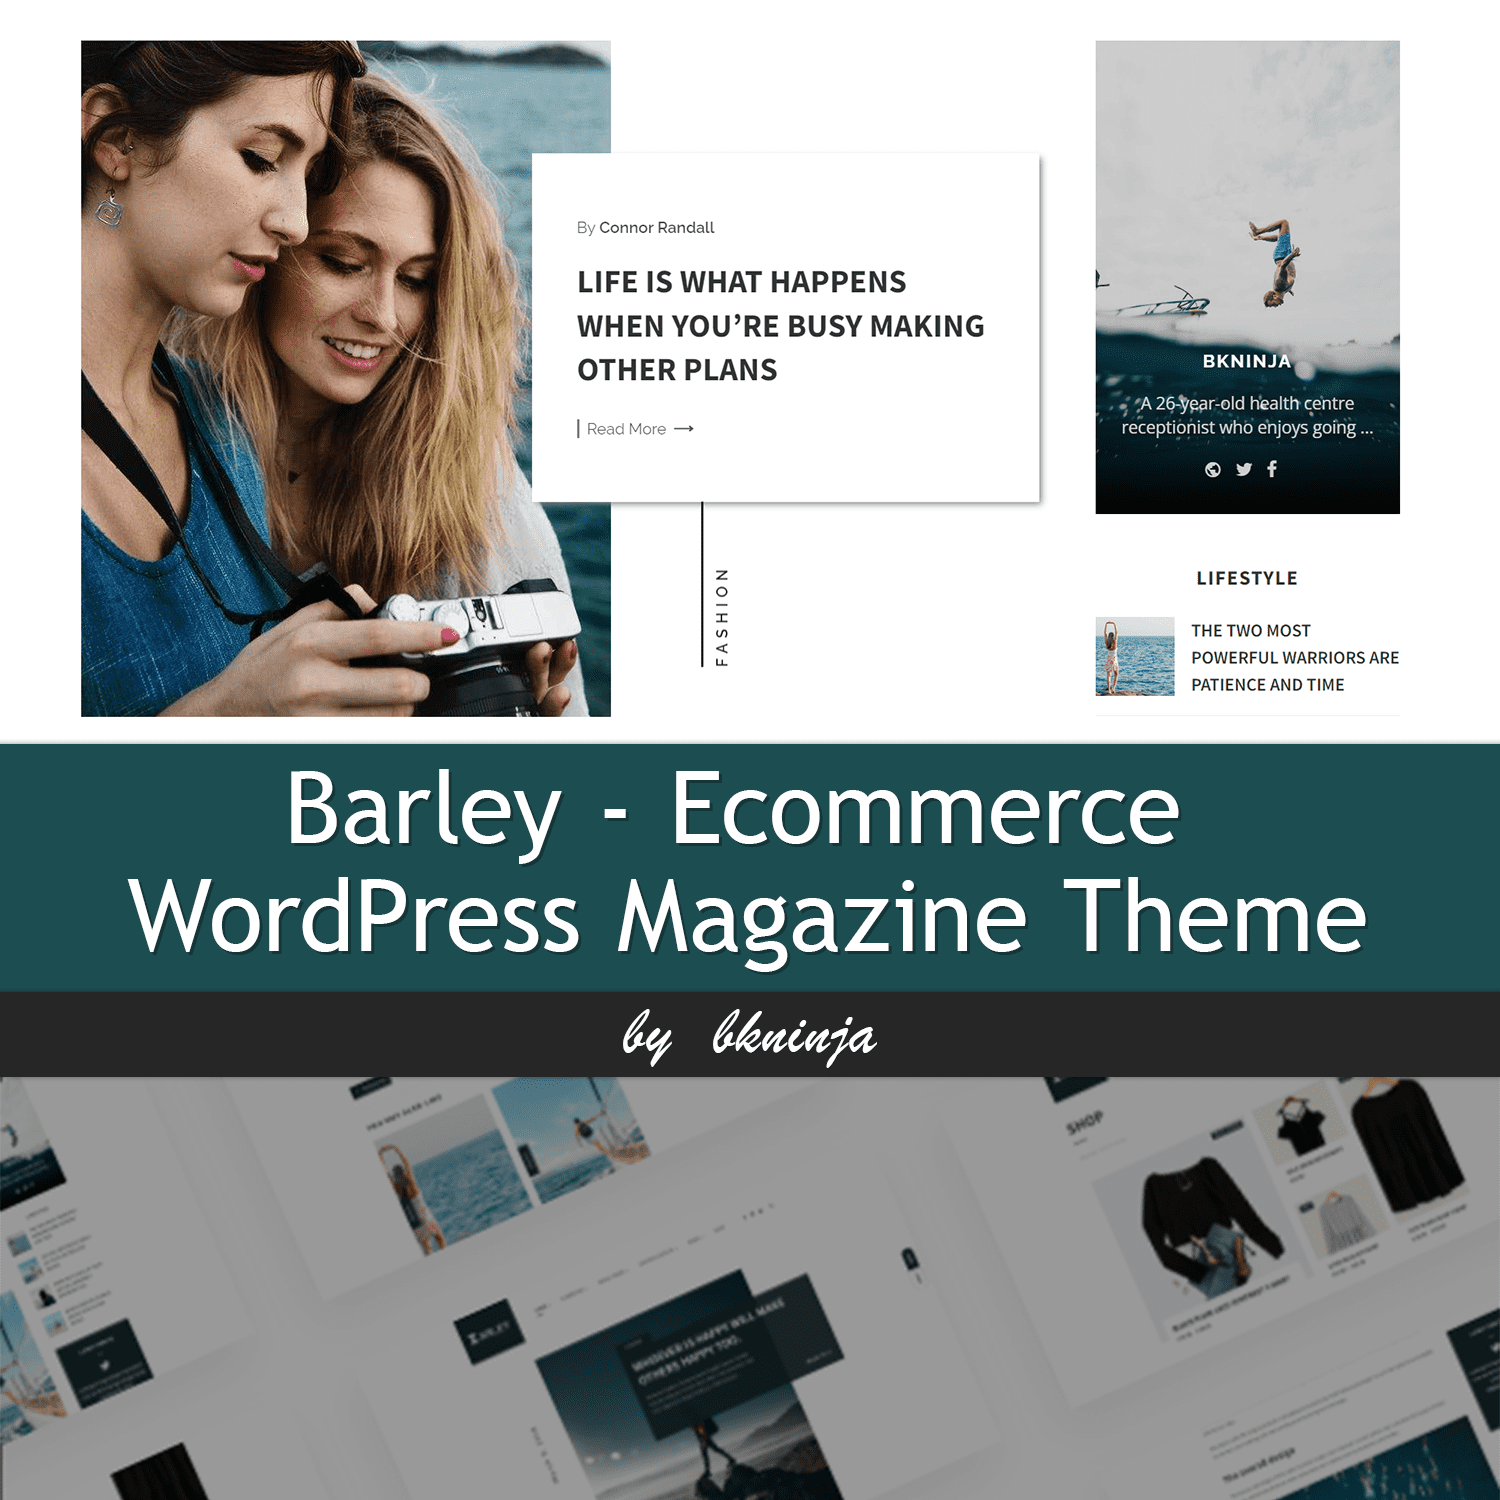 Barley ecommerce wordpress magazine theme, second picture 1500x1500.